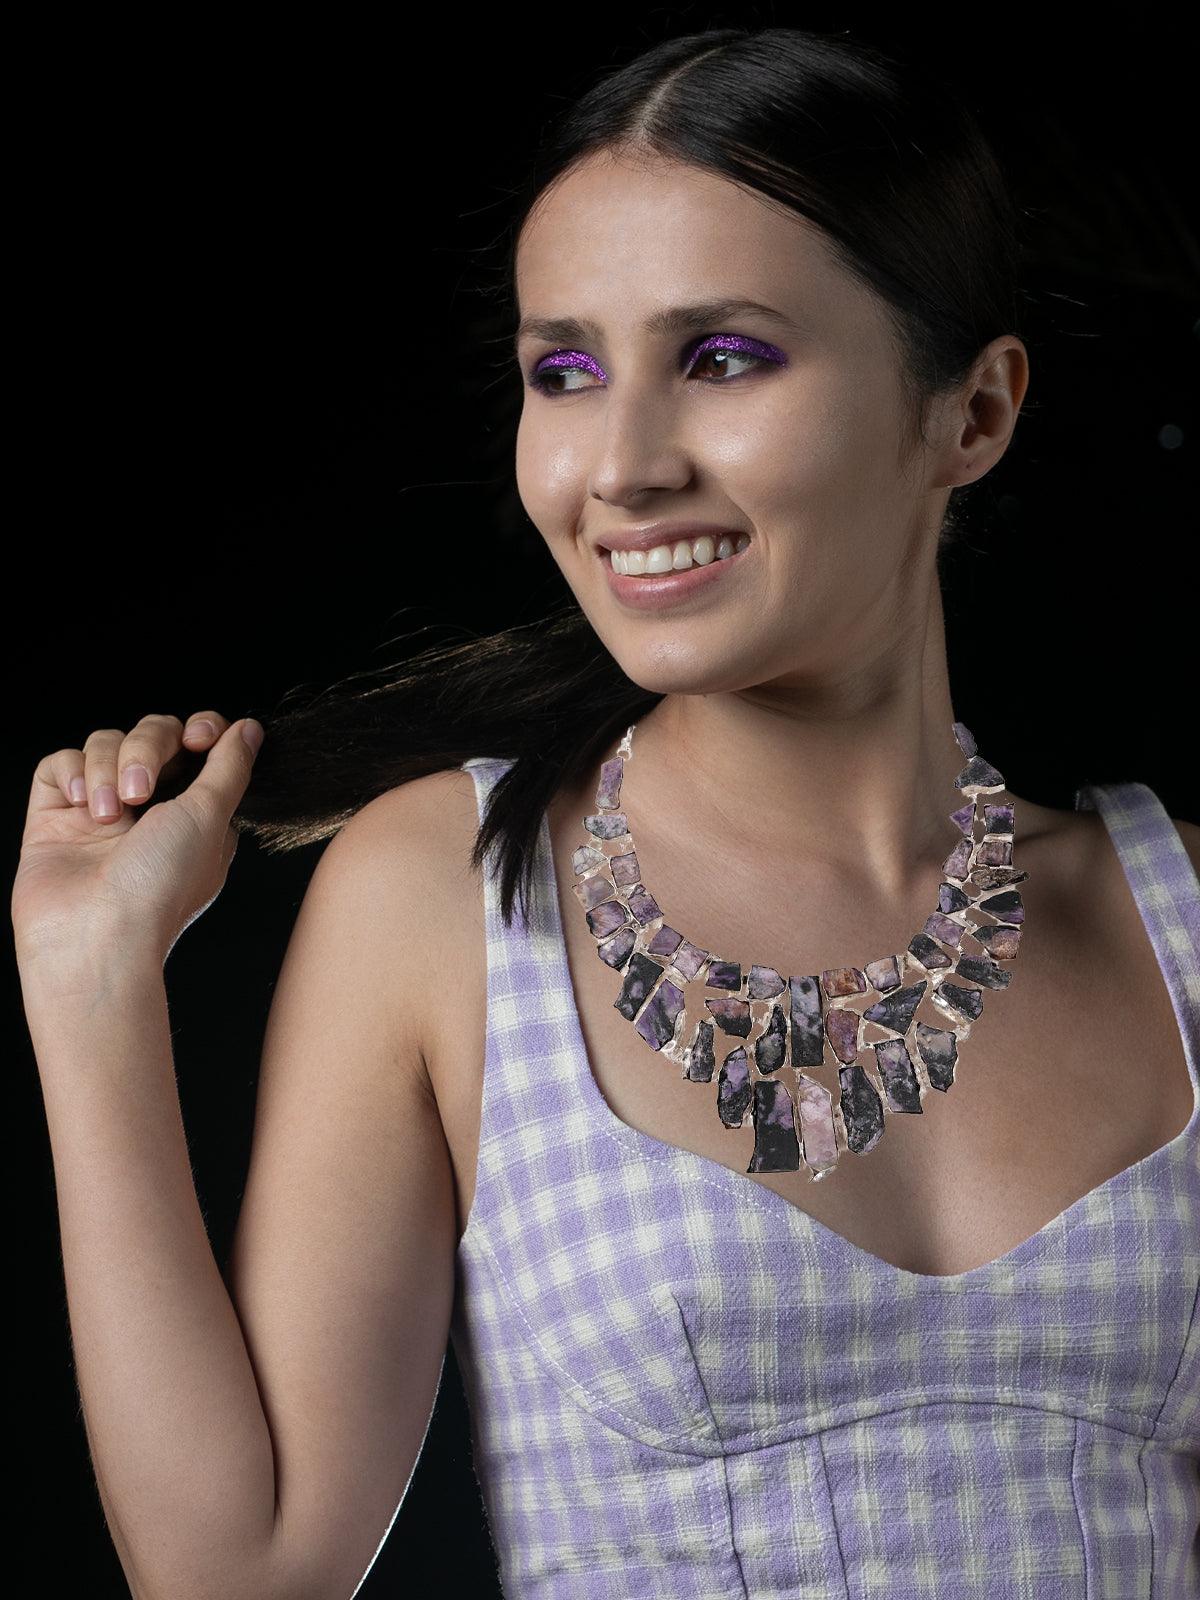 Women's Purple Blackish Hue Crystallised Necklace - Odette